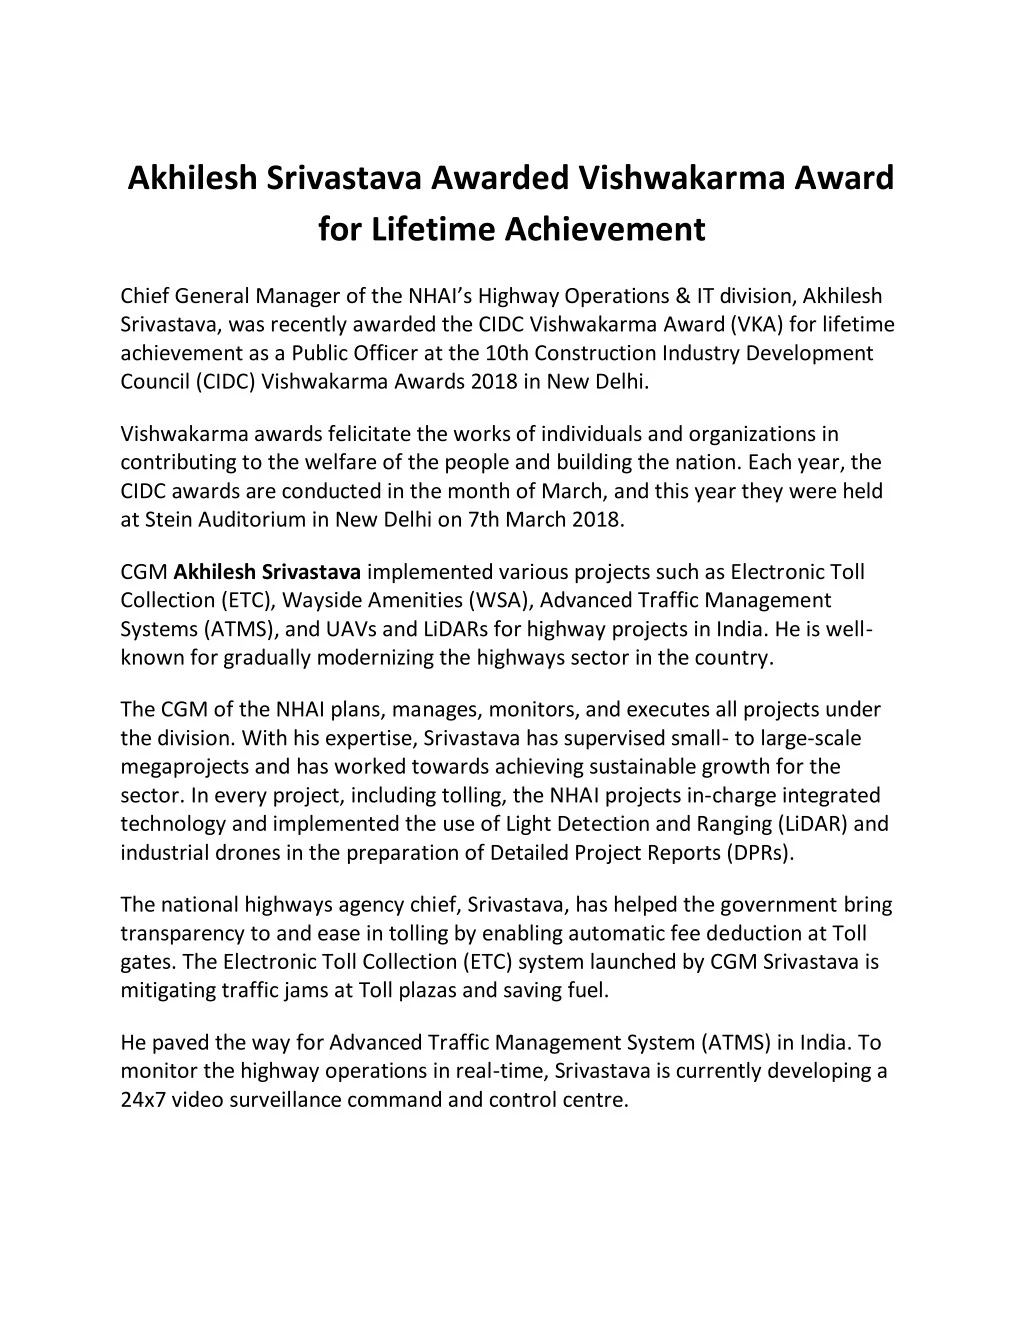 akhilesh srivastava awarded vishwakarma award